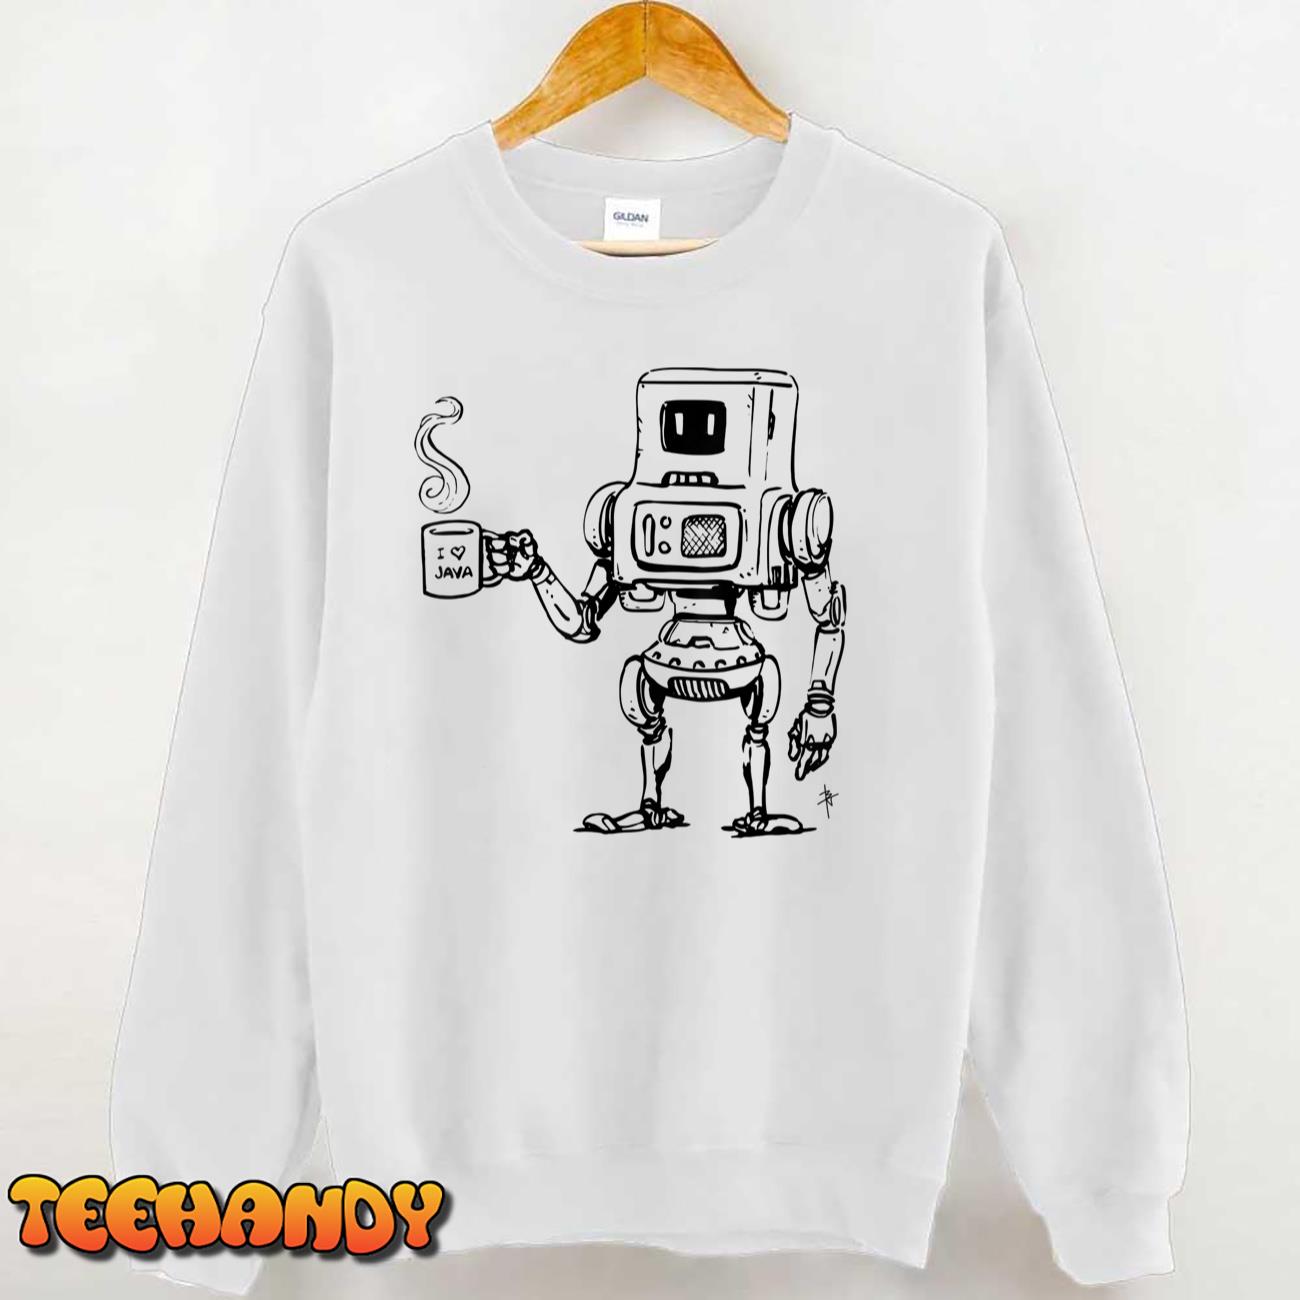 Java-Bot T-Shirt